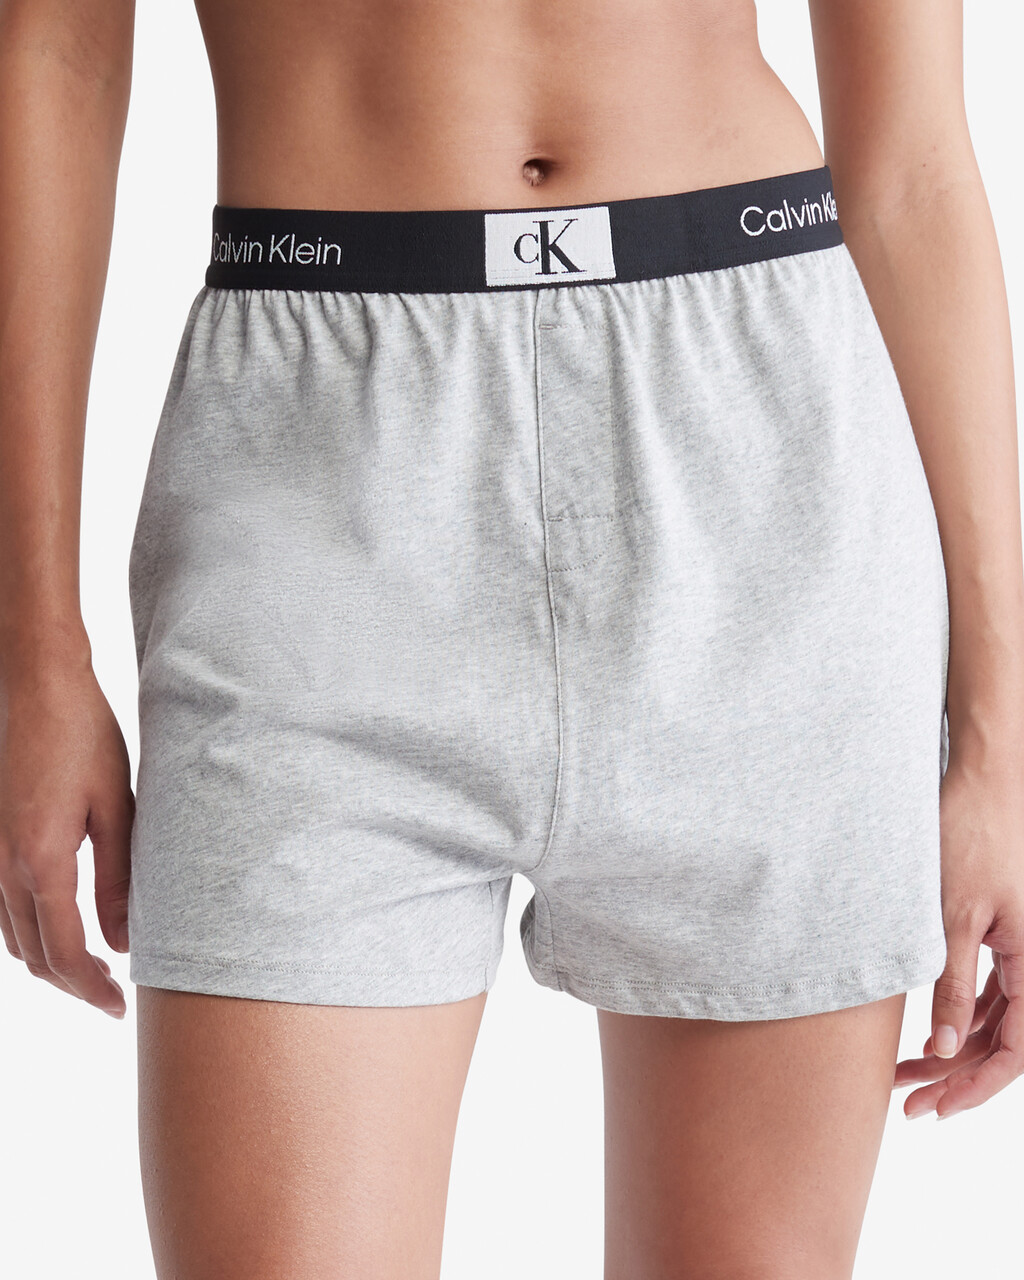 Calvin Klein 1996 Sleep Shorts, B10 Grey Heather, hi-res